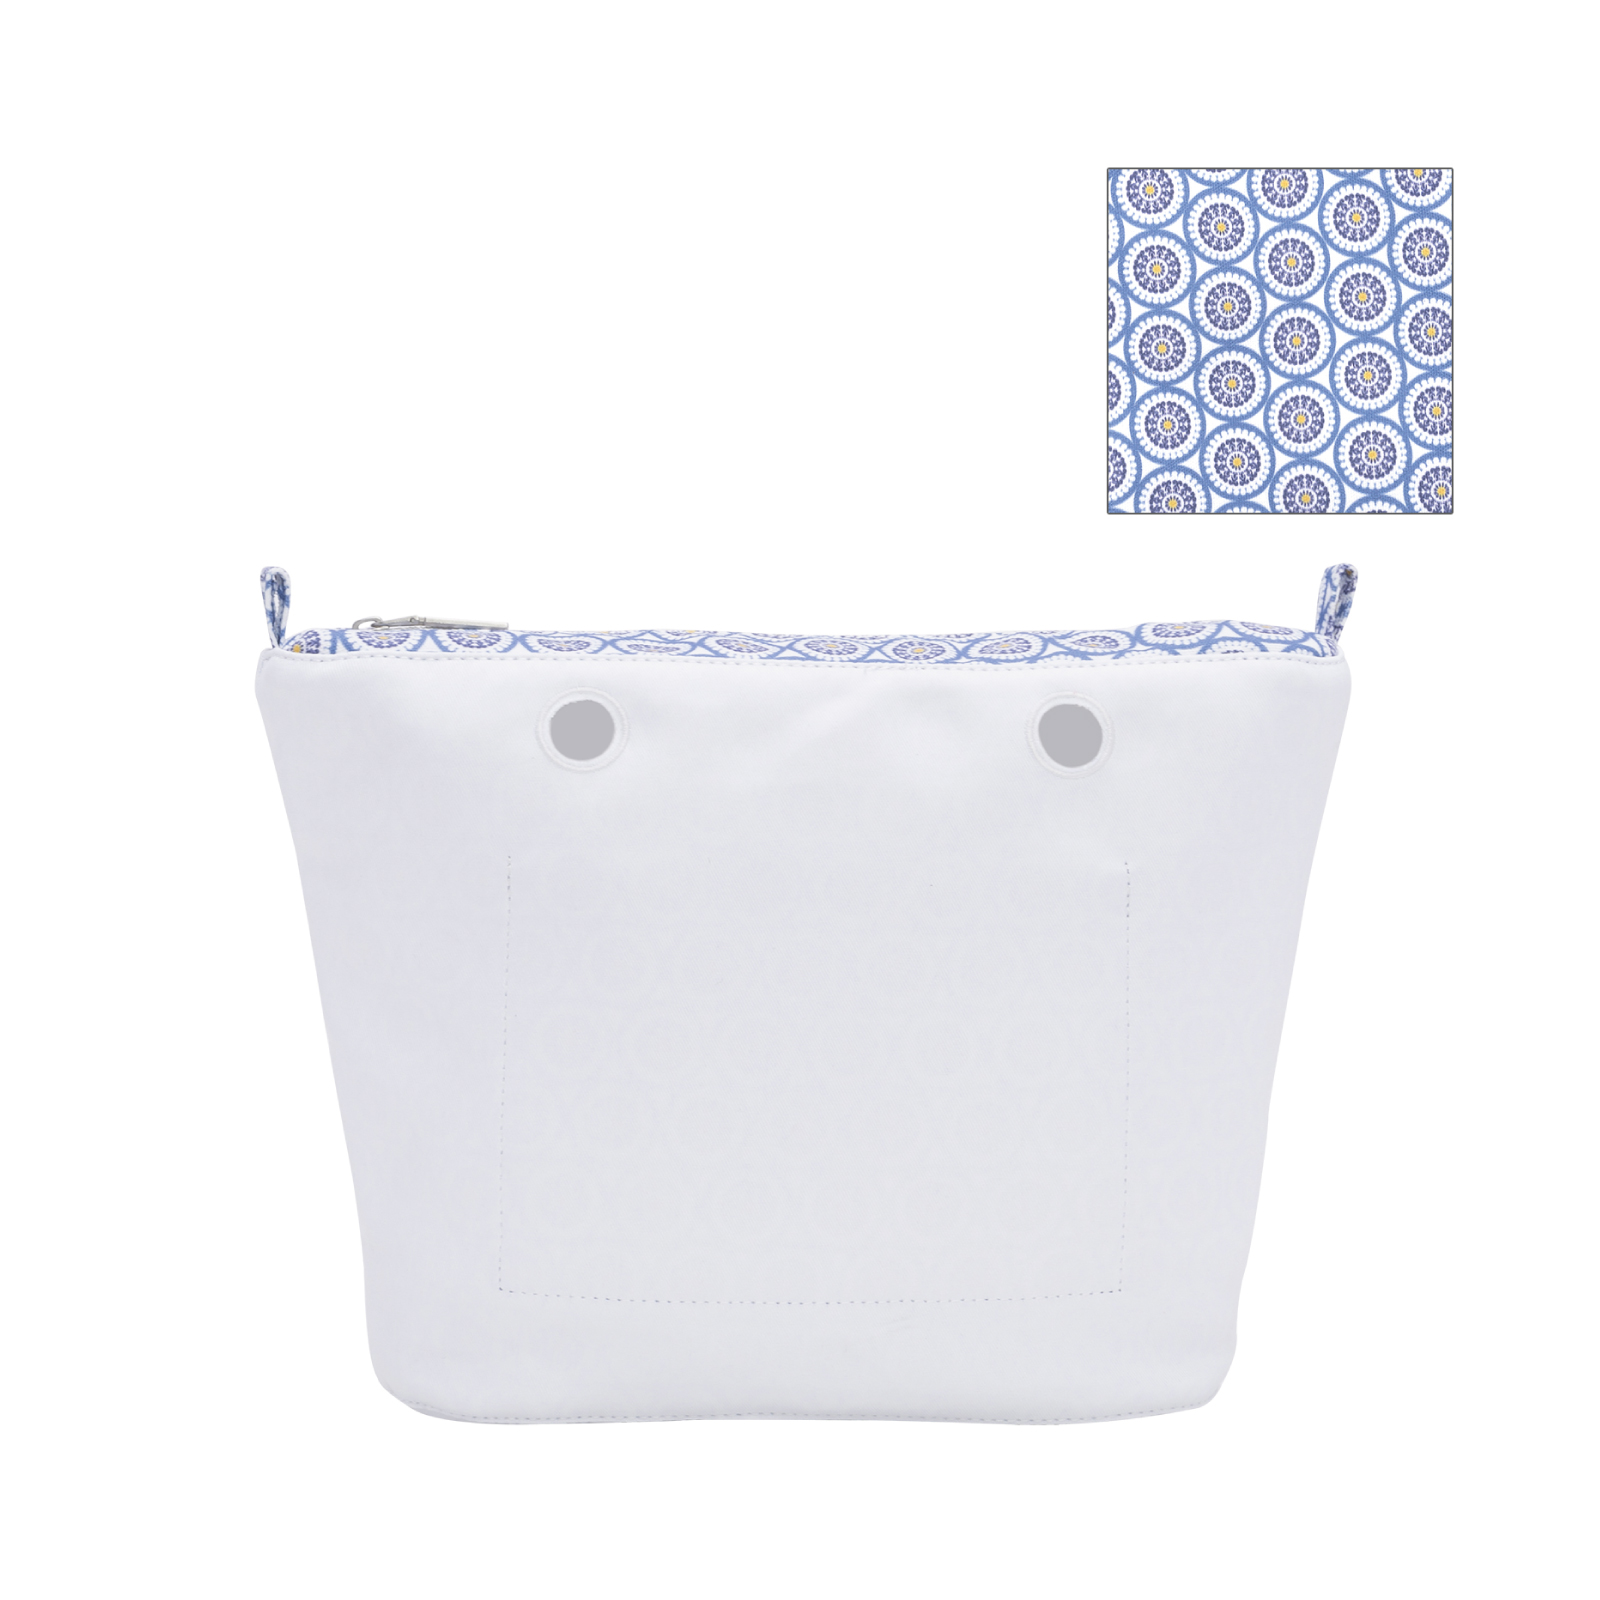 O Bag Mini Insert Zip Up Switch Mediterranean Circles Print Fabric – Cobalt